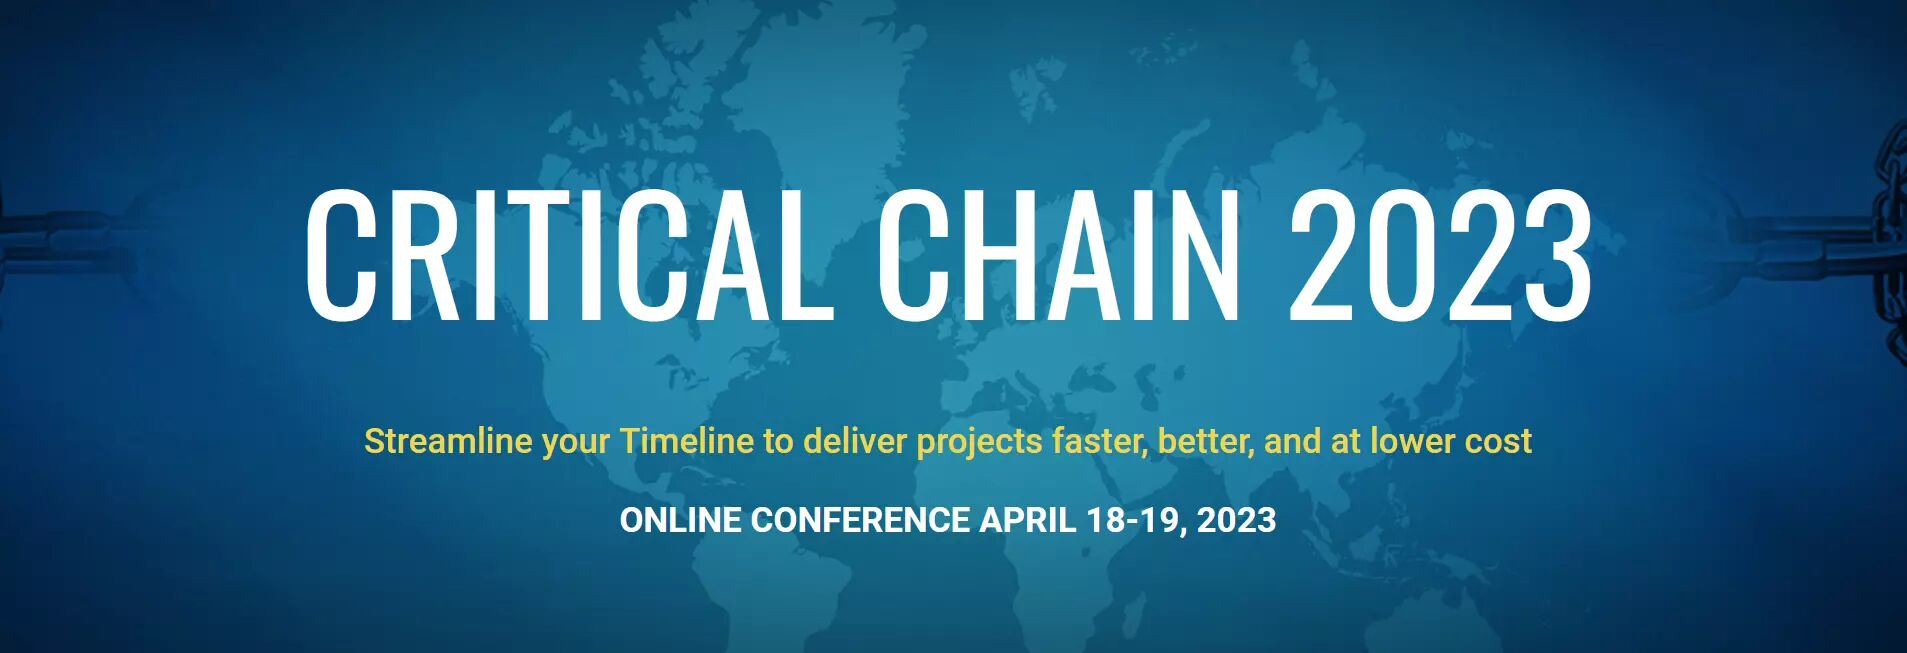 conference critical chain tocico 2023